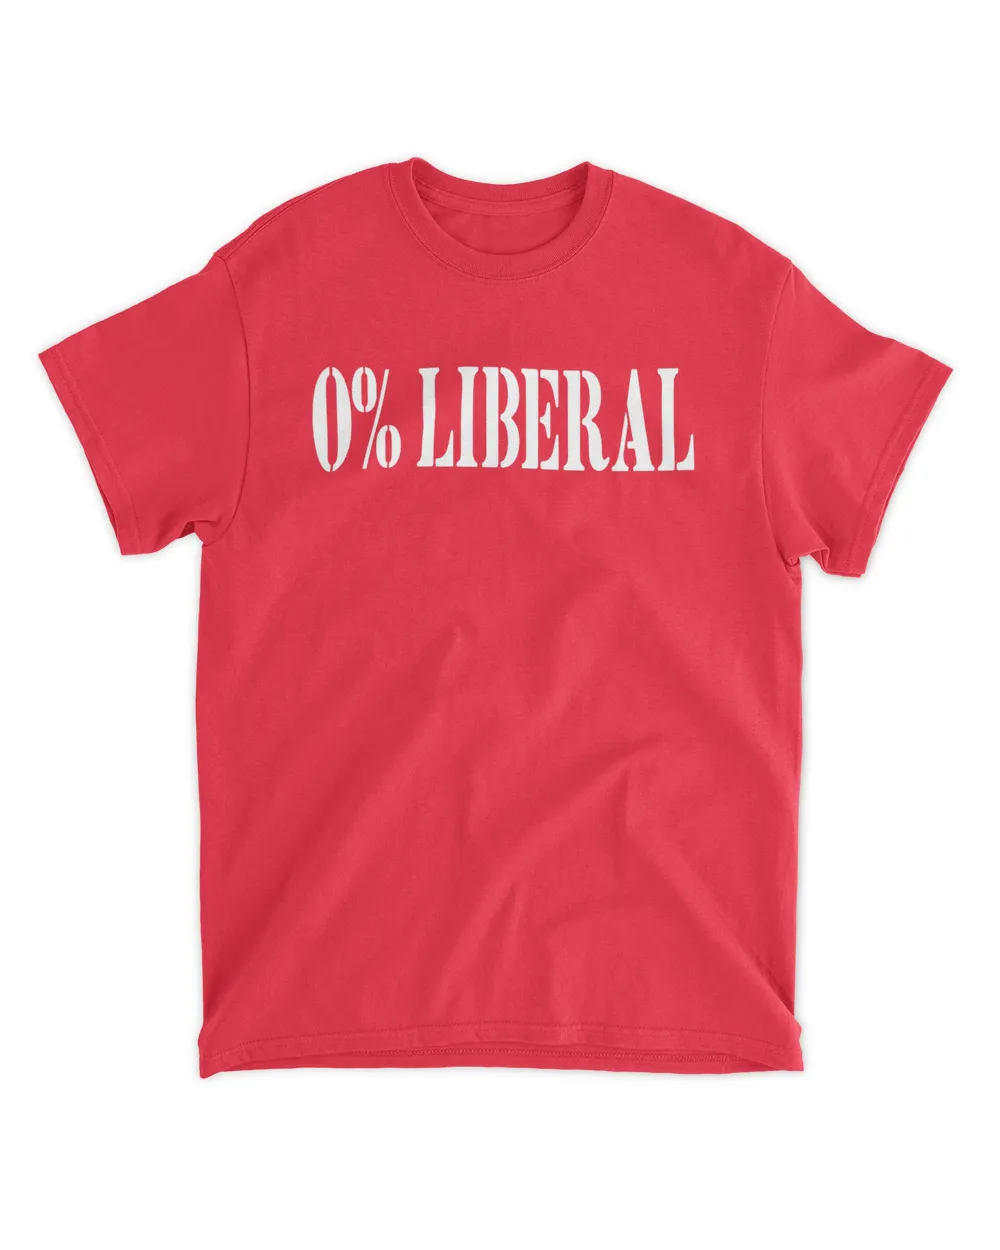 Ccg Bryson Wearing 0% Liberal Tee Shirt